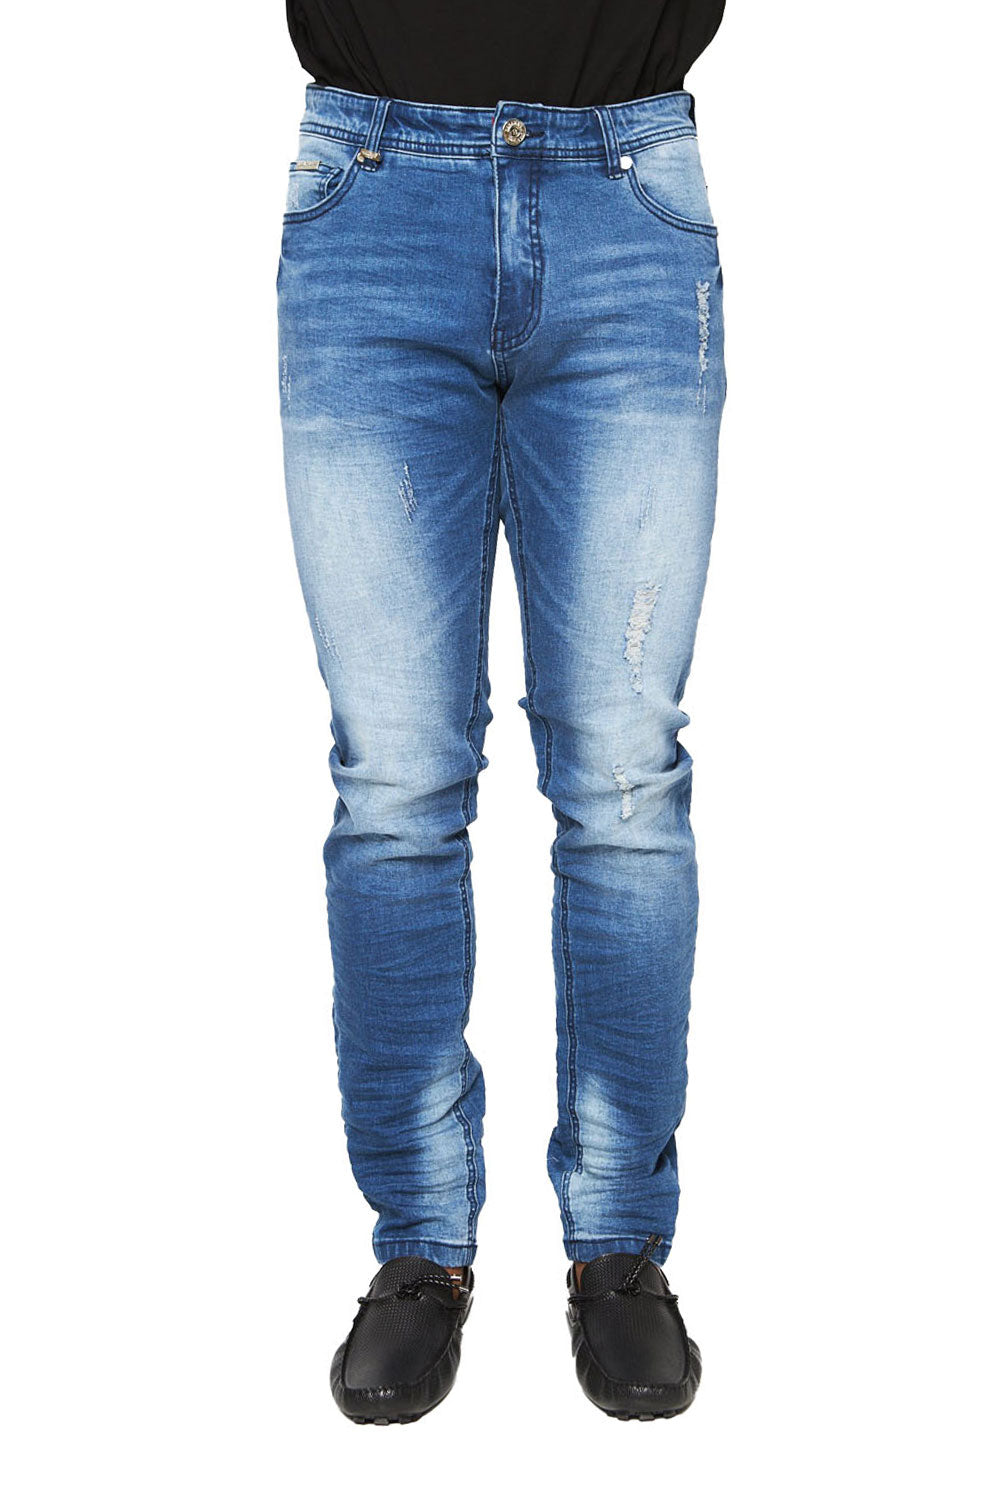 BARABAS Men's Distressed ripped Black blue Denim Jeans SN8851 